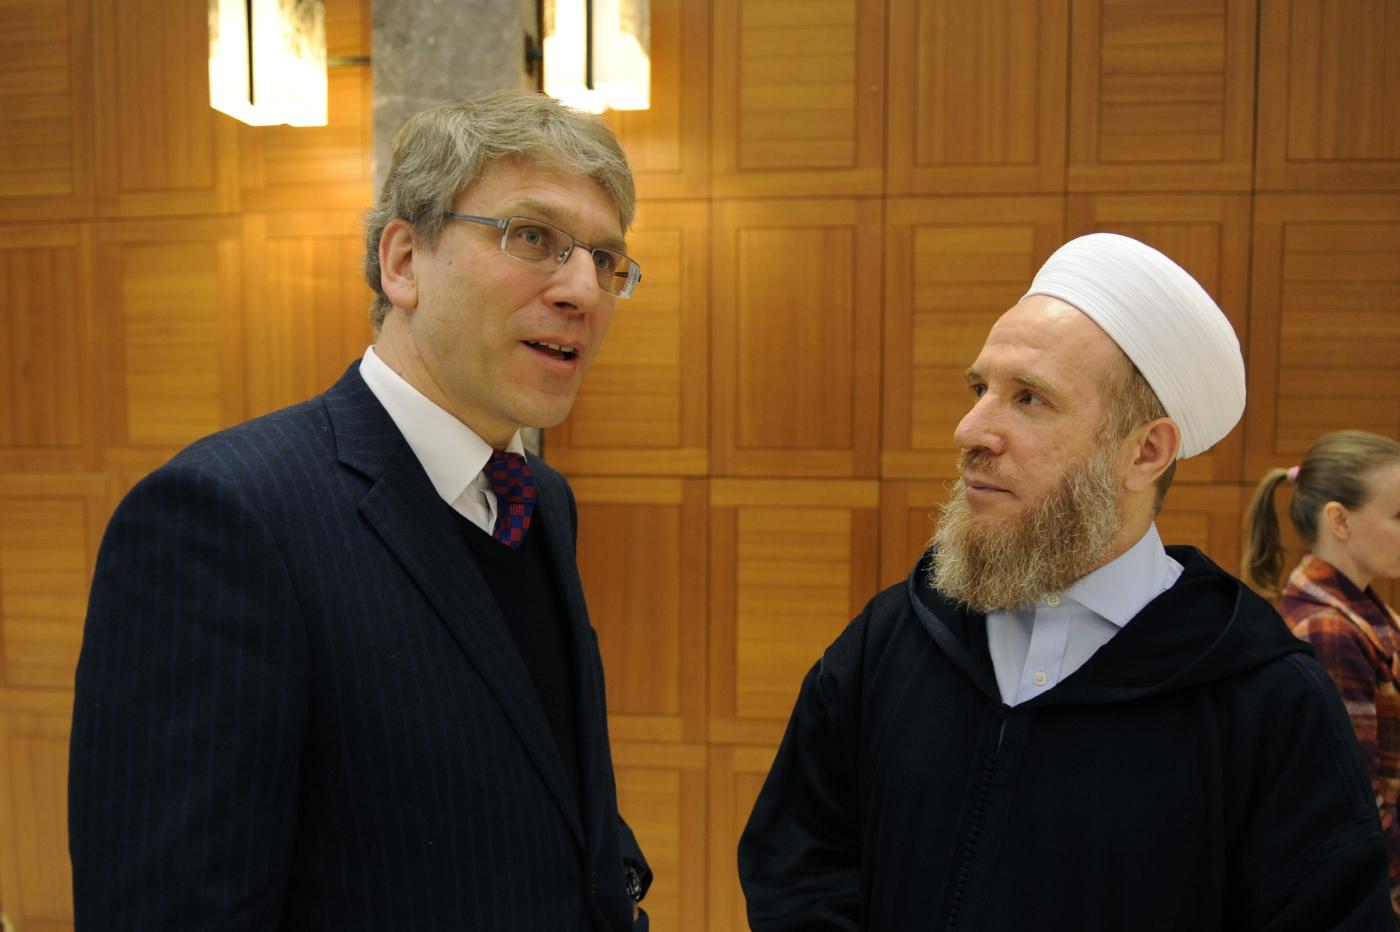 WCC general secretary Olav Fykse Tveit (left) with Syrian member of the opposition Shaykh Muhammad Al-Yaqoubi at the Ecumenical Centre in Geneva. 